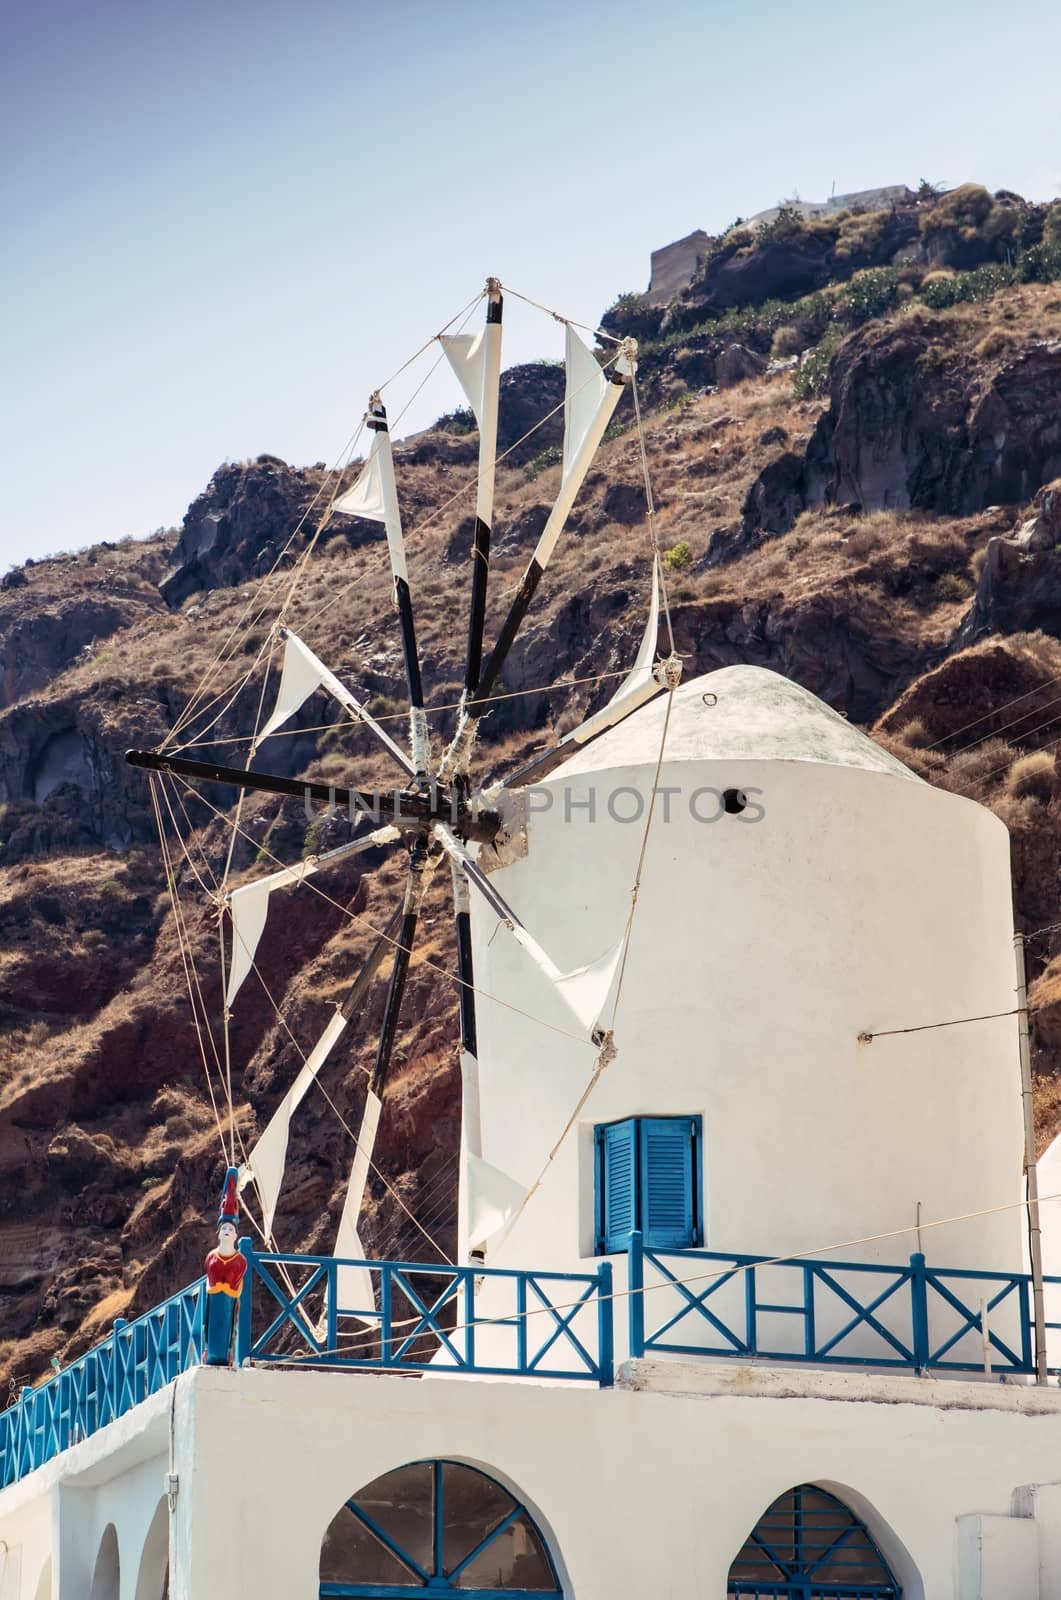 Windmill in Therasia, Santorini, Aegean Sea, Greece by mitakag